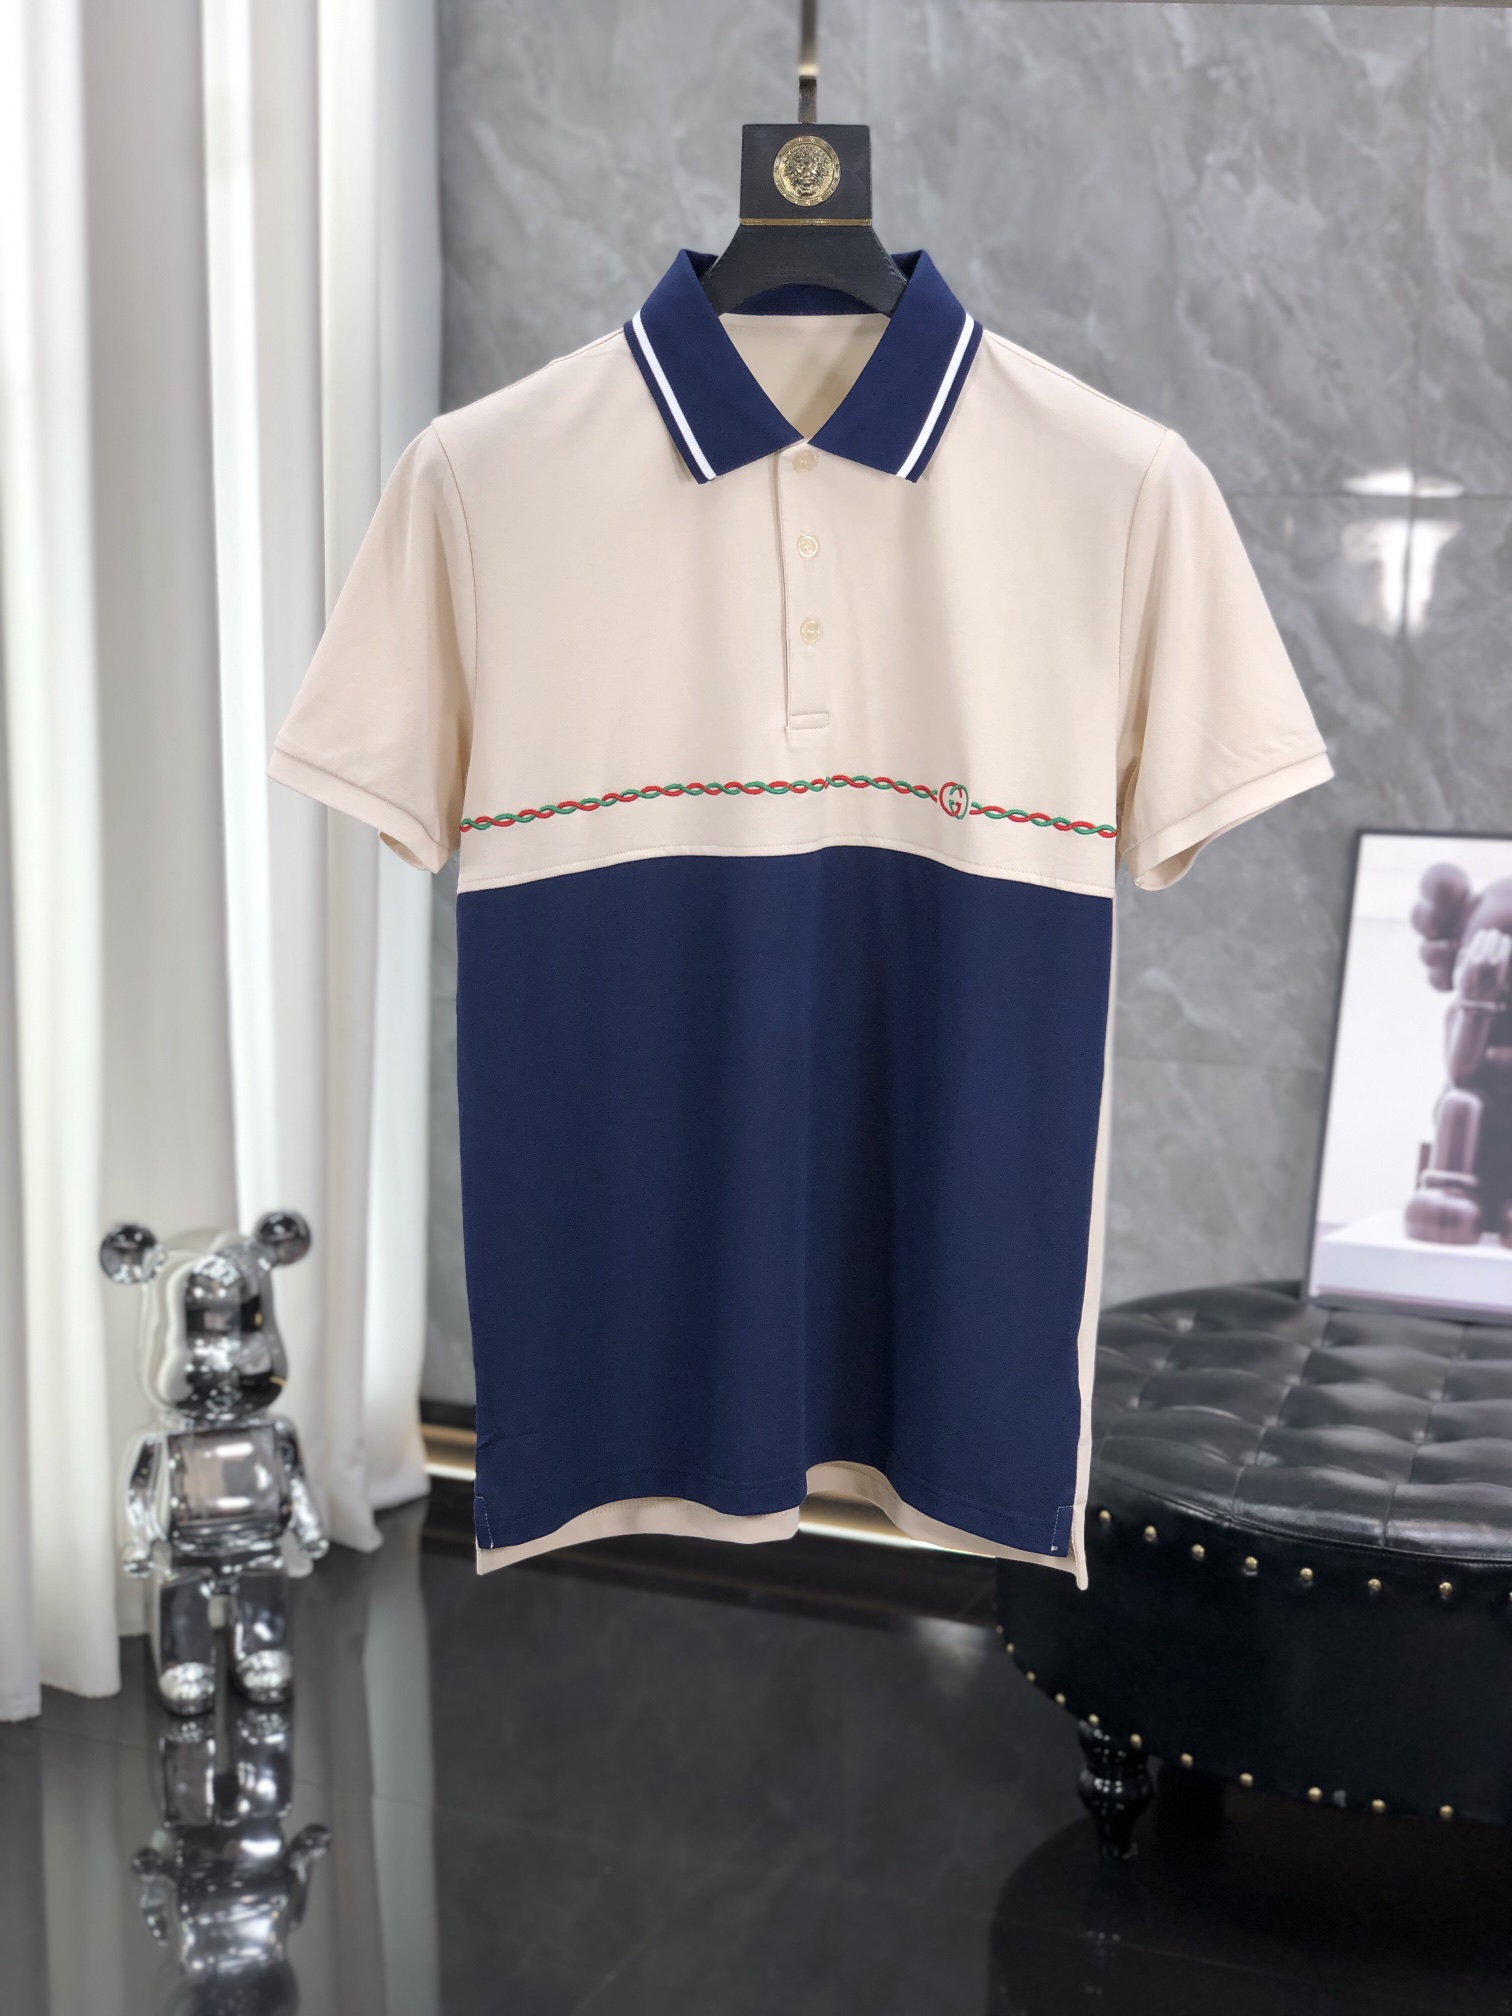 Gucci Clothing Polo T-Shirt Cotton Short Sleeve